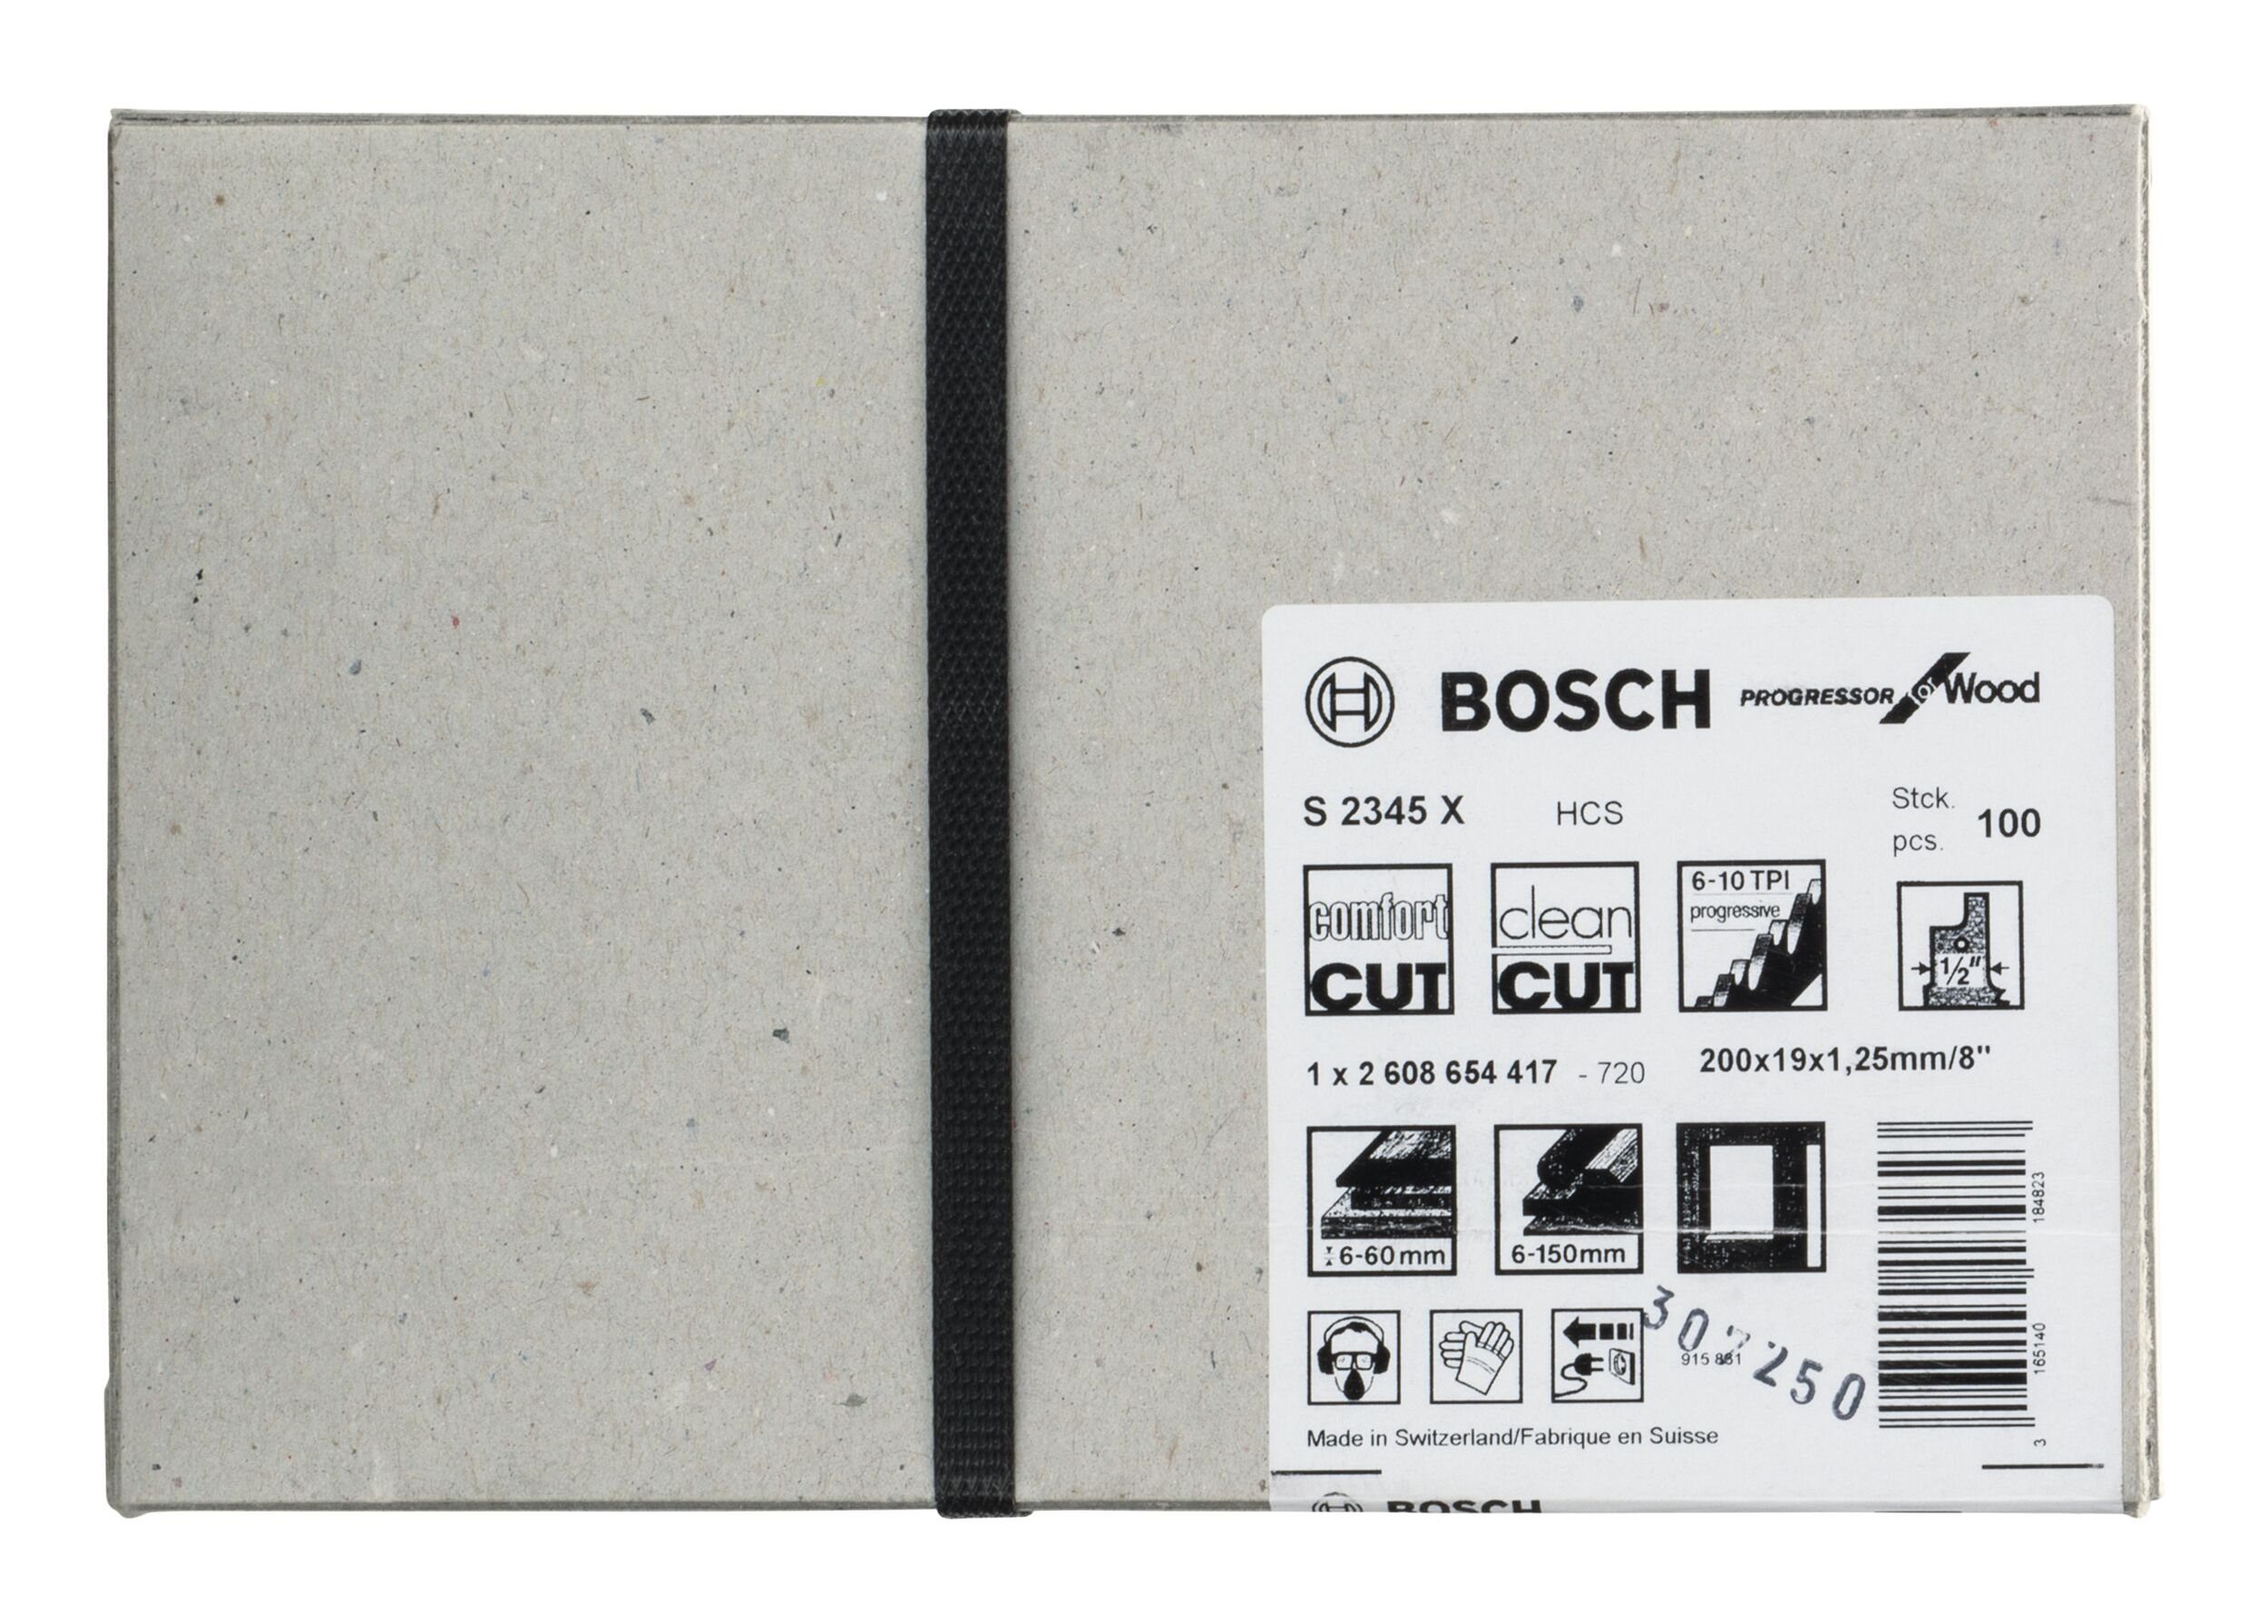 BOSCH Säbelsägeblatt Progressor (100 Stück), 2345 X - S 100er-Pack for Wood